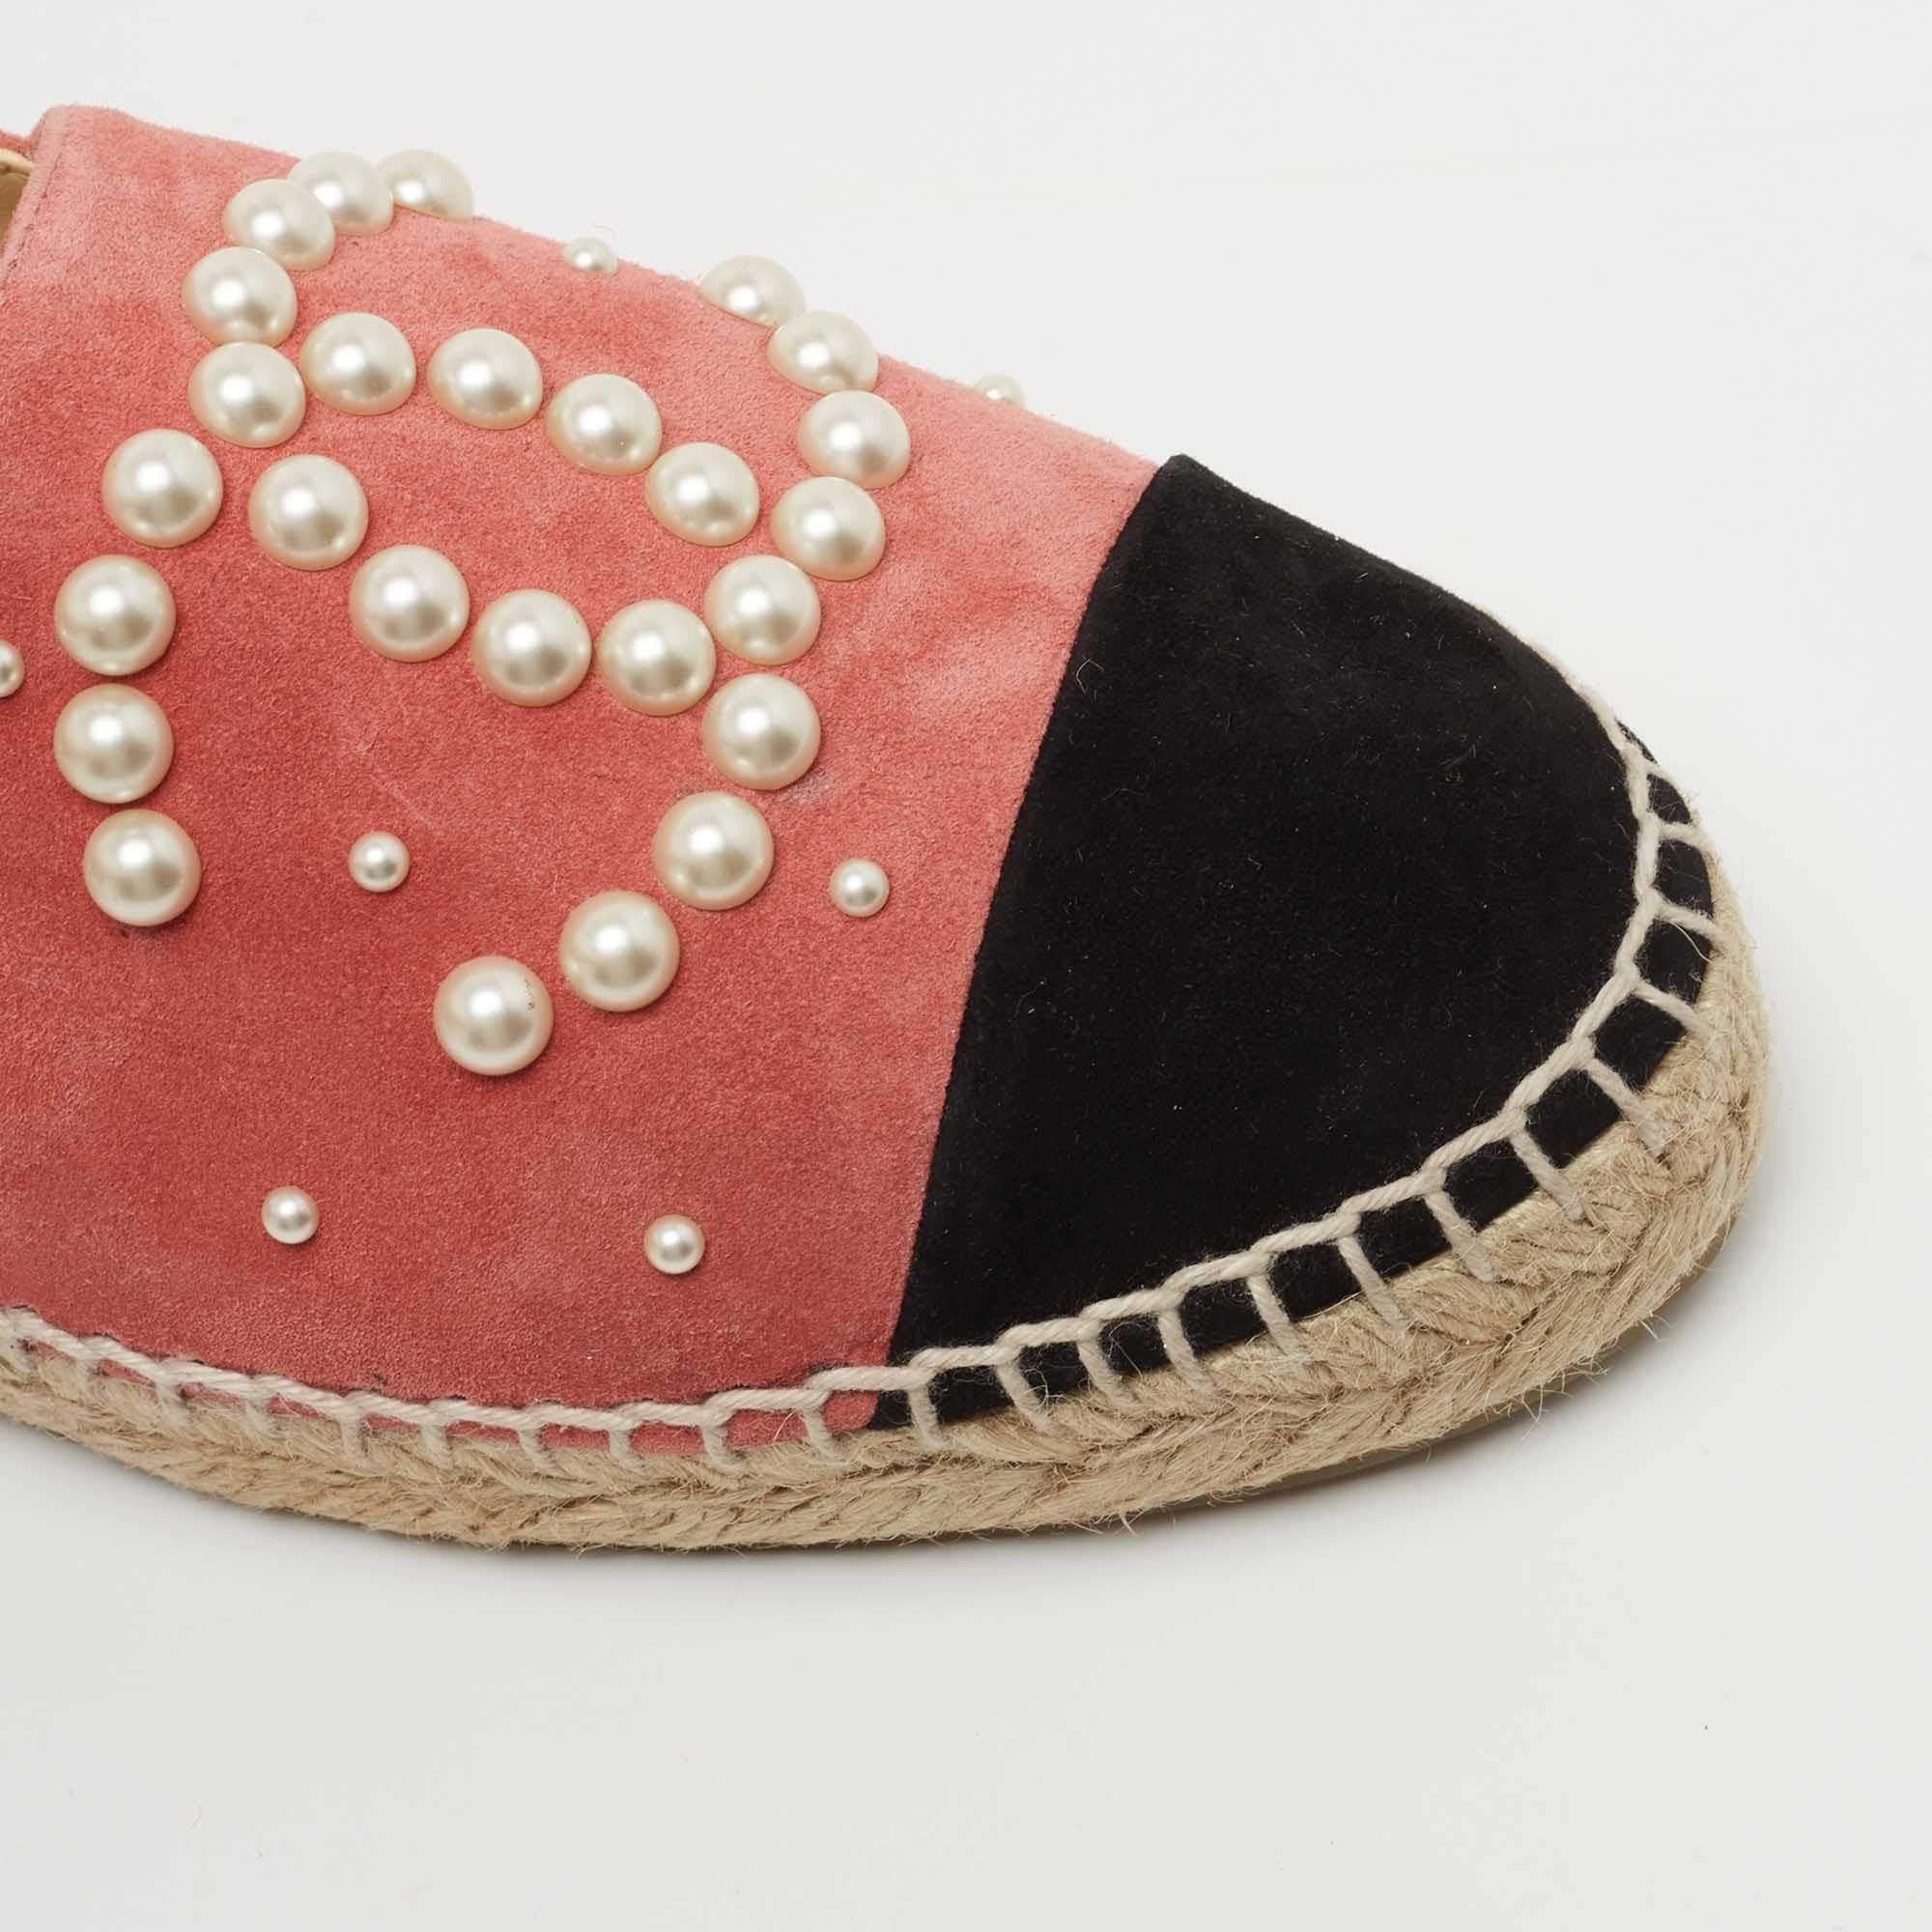 Chanel Pink/Black Suede CC Pearl Espadrilles Flats Size 37 2